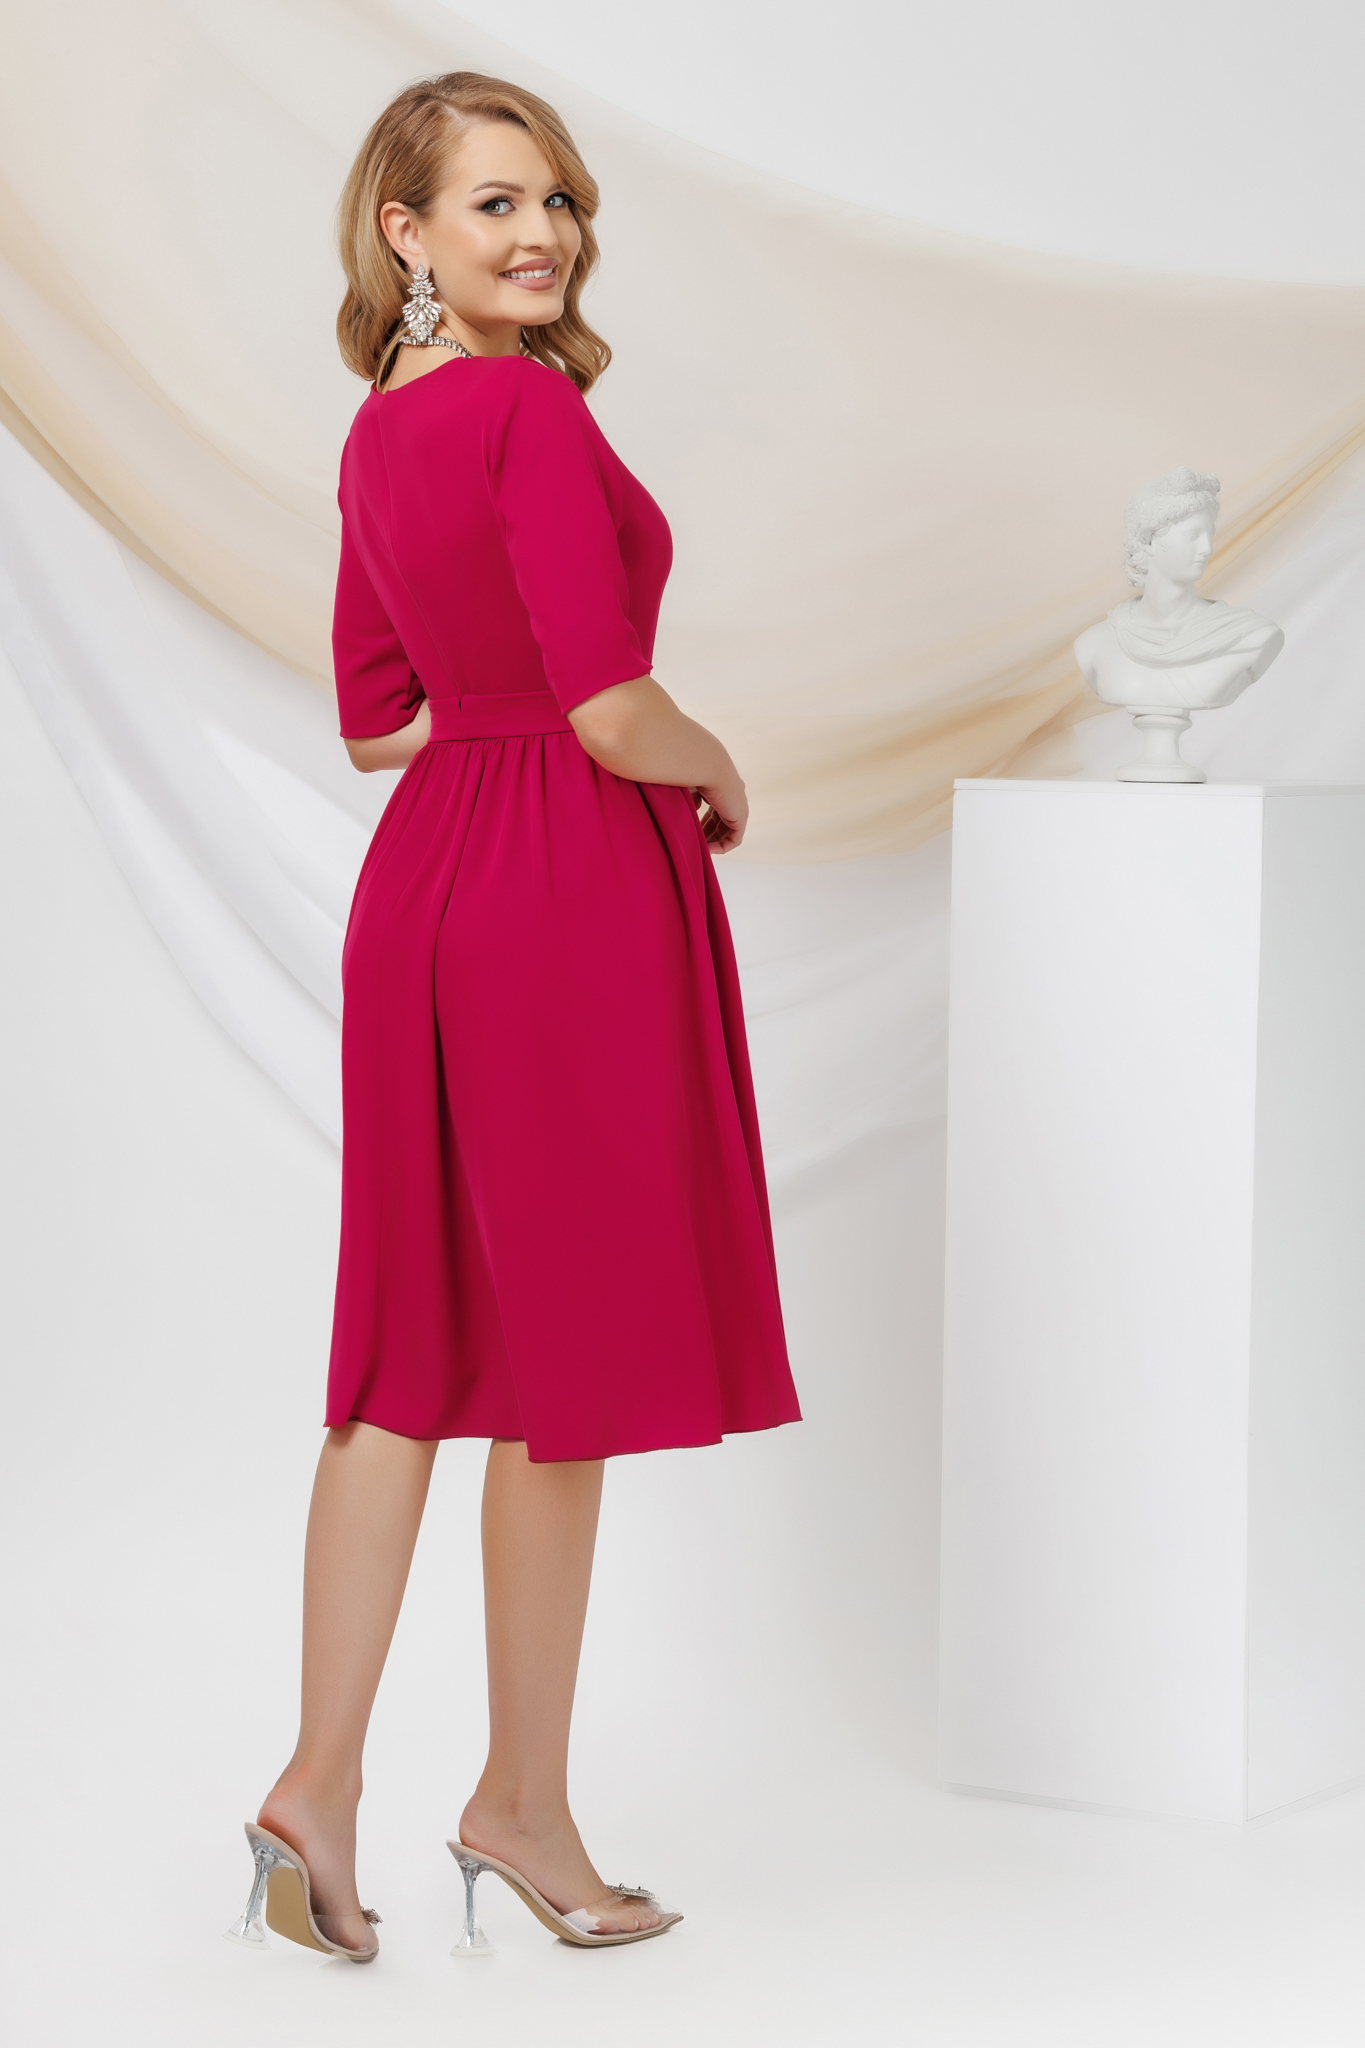 Fuchsia Elastic Fabric Dress in Flared Style with Wraparound Neckline and Detachable Belt - PrettyGirl 2 - StarShinerS.com